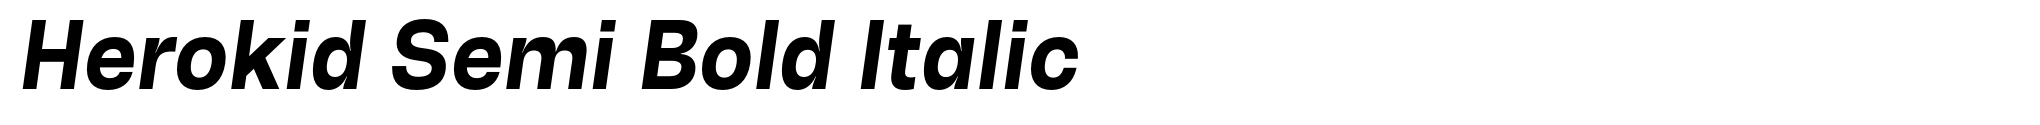 Herokid Semi Bold Italic image